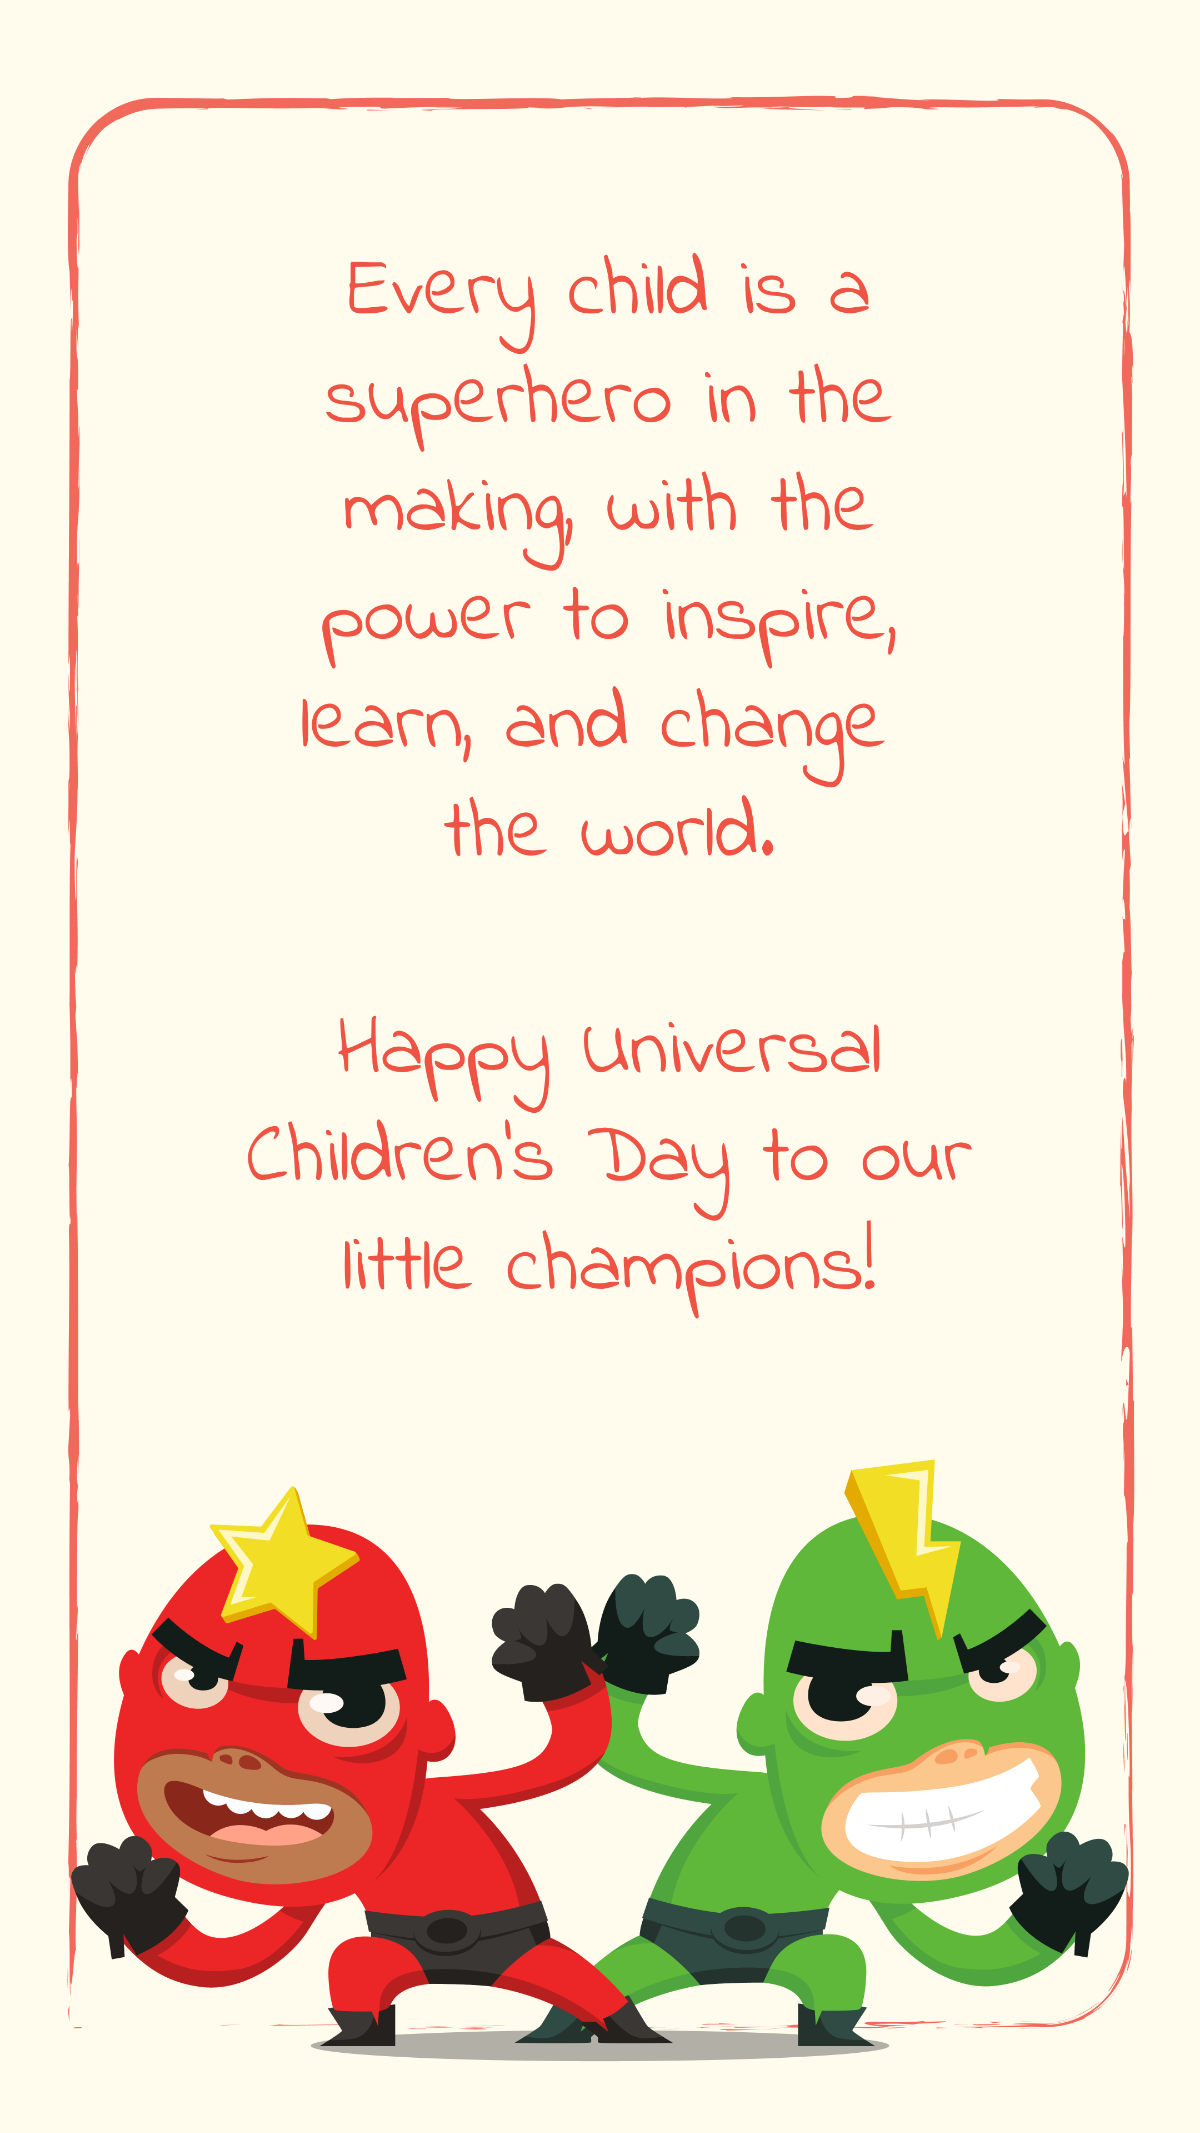 Universal Children’s Day Quote